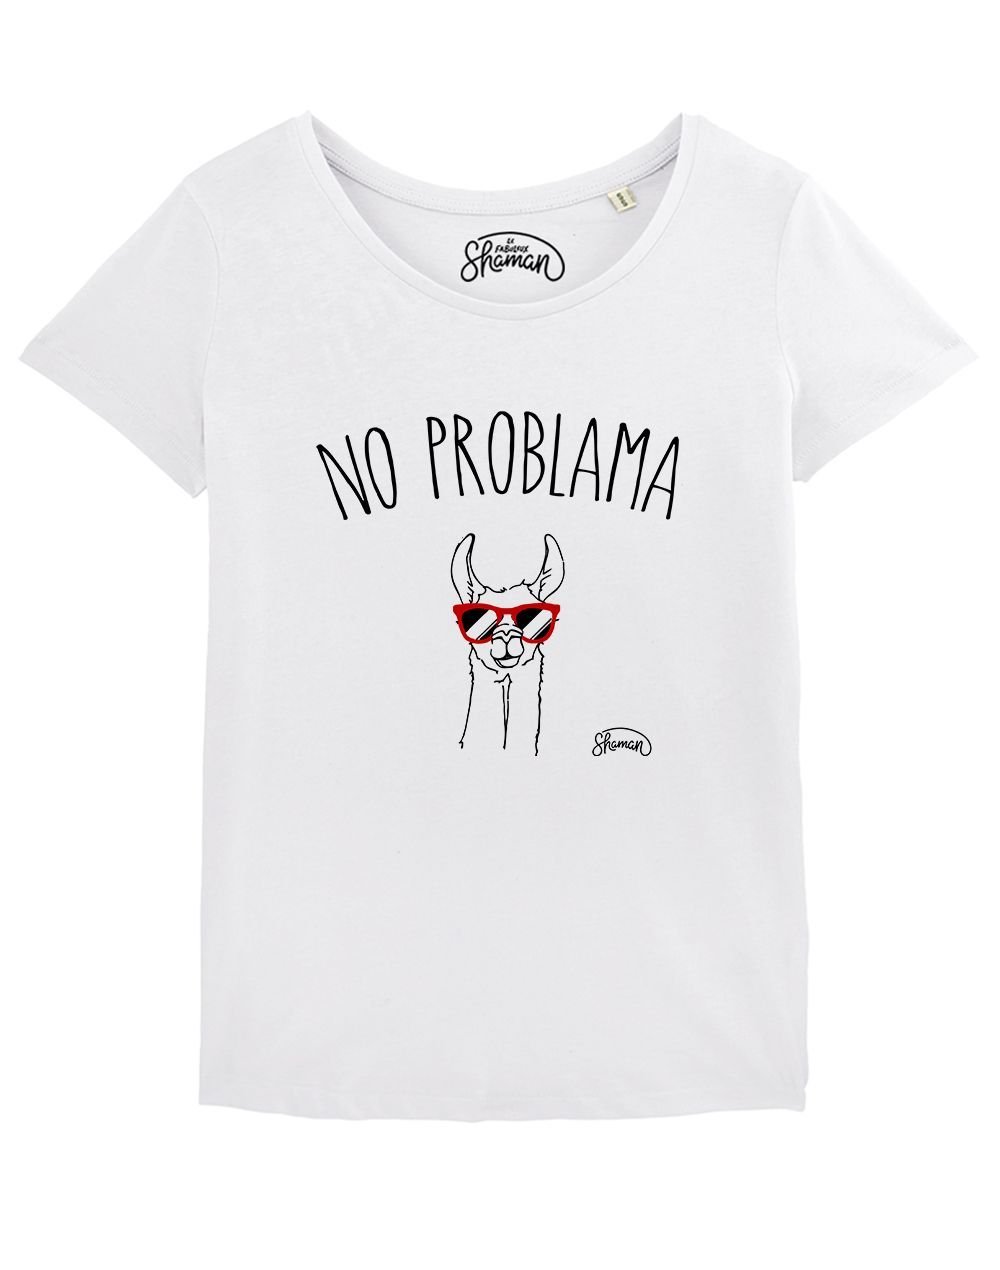 T-shirt "No problama"